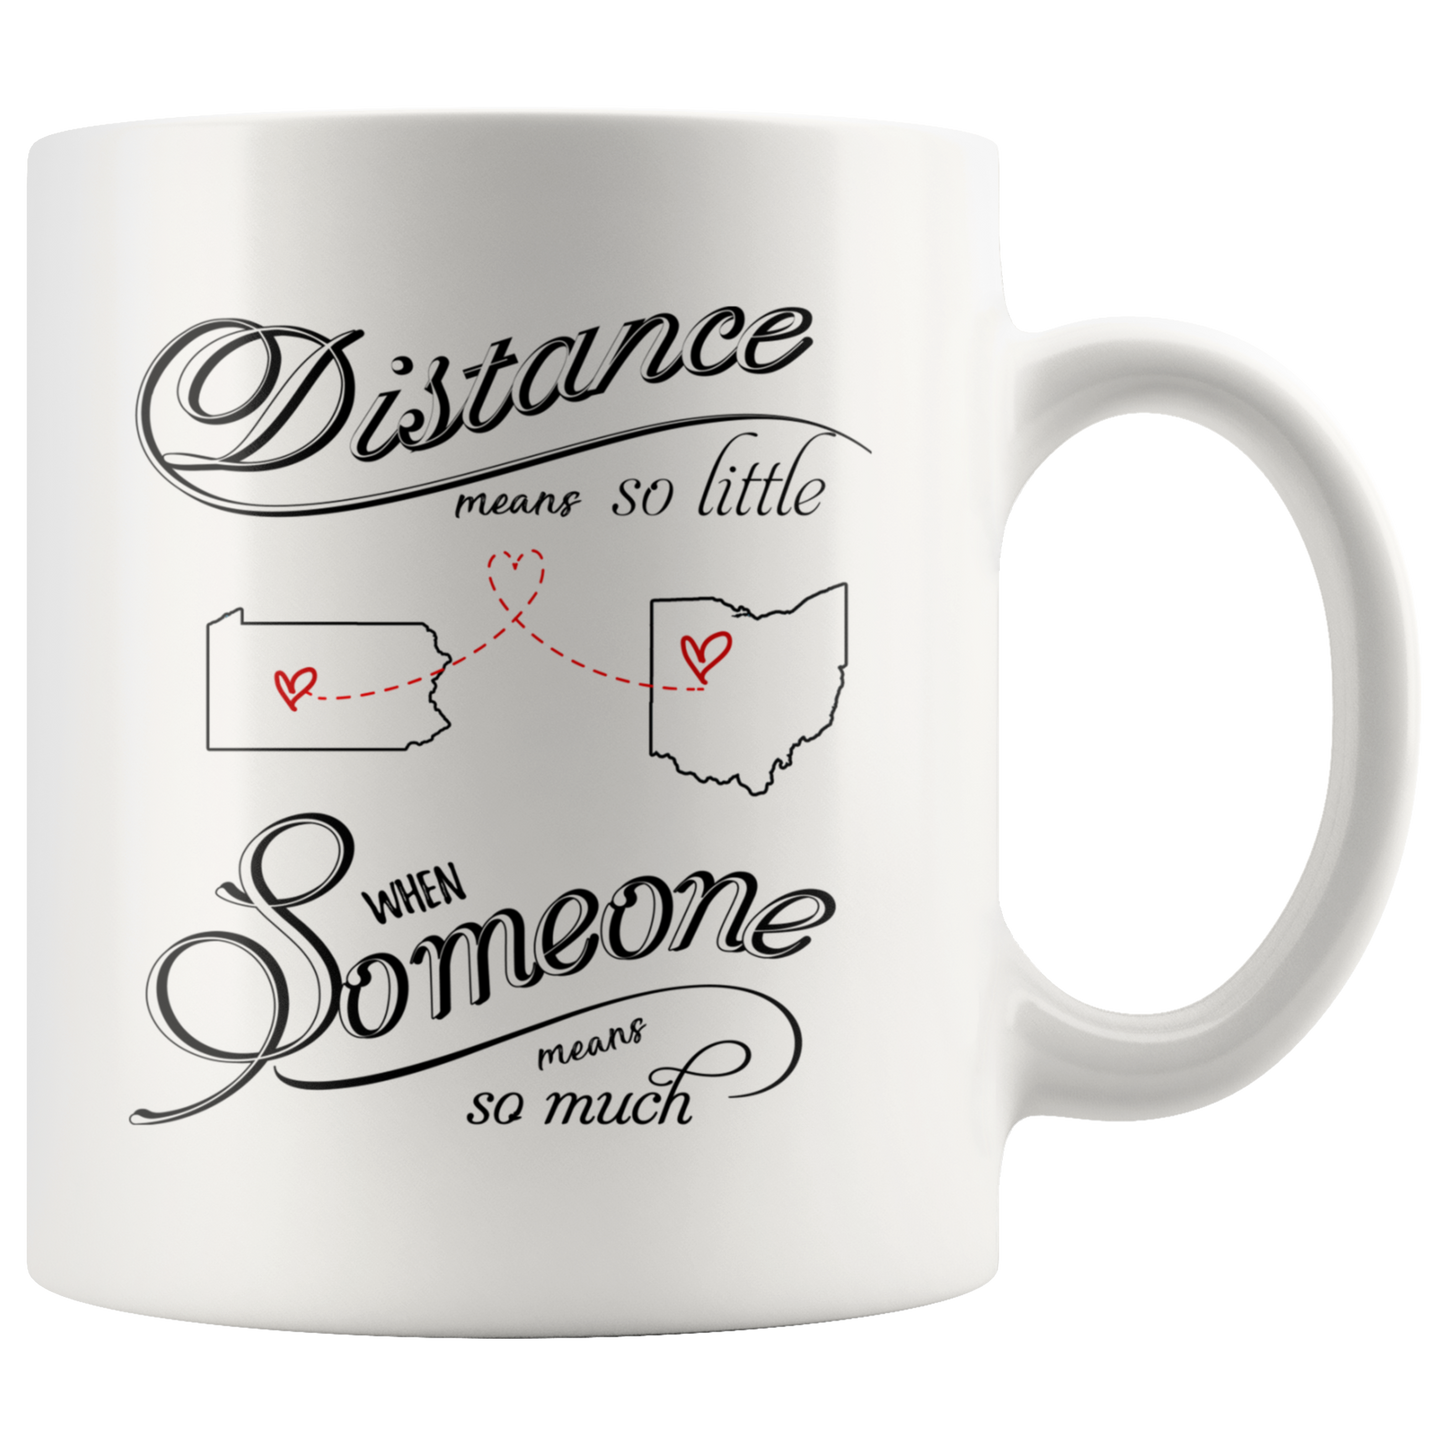 M-20484906-sp-25925 - [ Pennsylvania | Ohio ] (mug_11oz_white) Mothers Day Coffee Mug Pennsylvania Ohio Distance Means So L